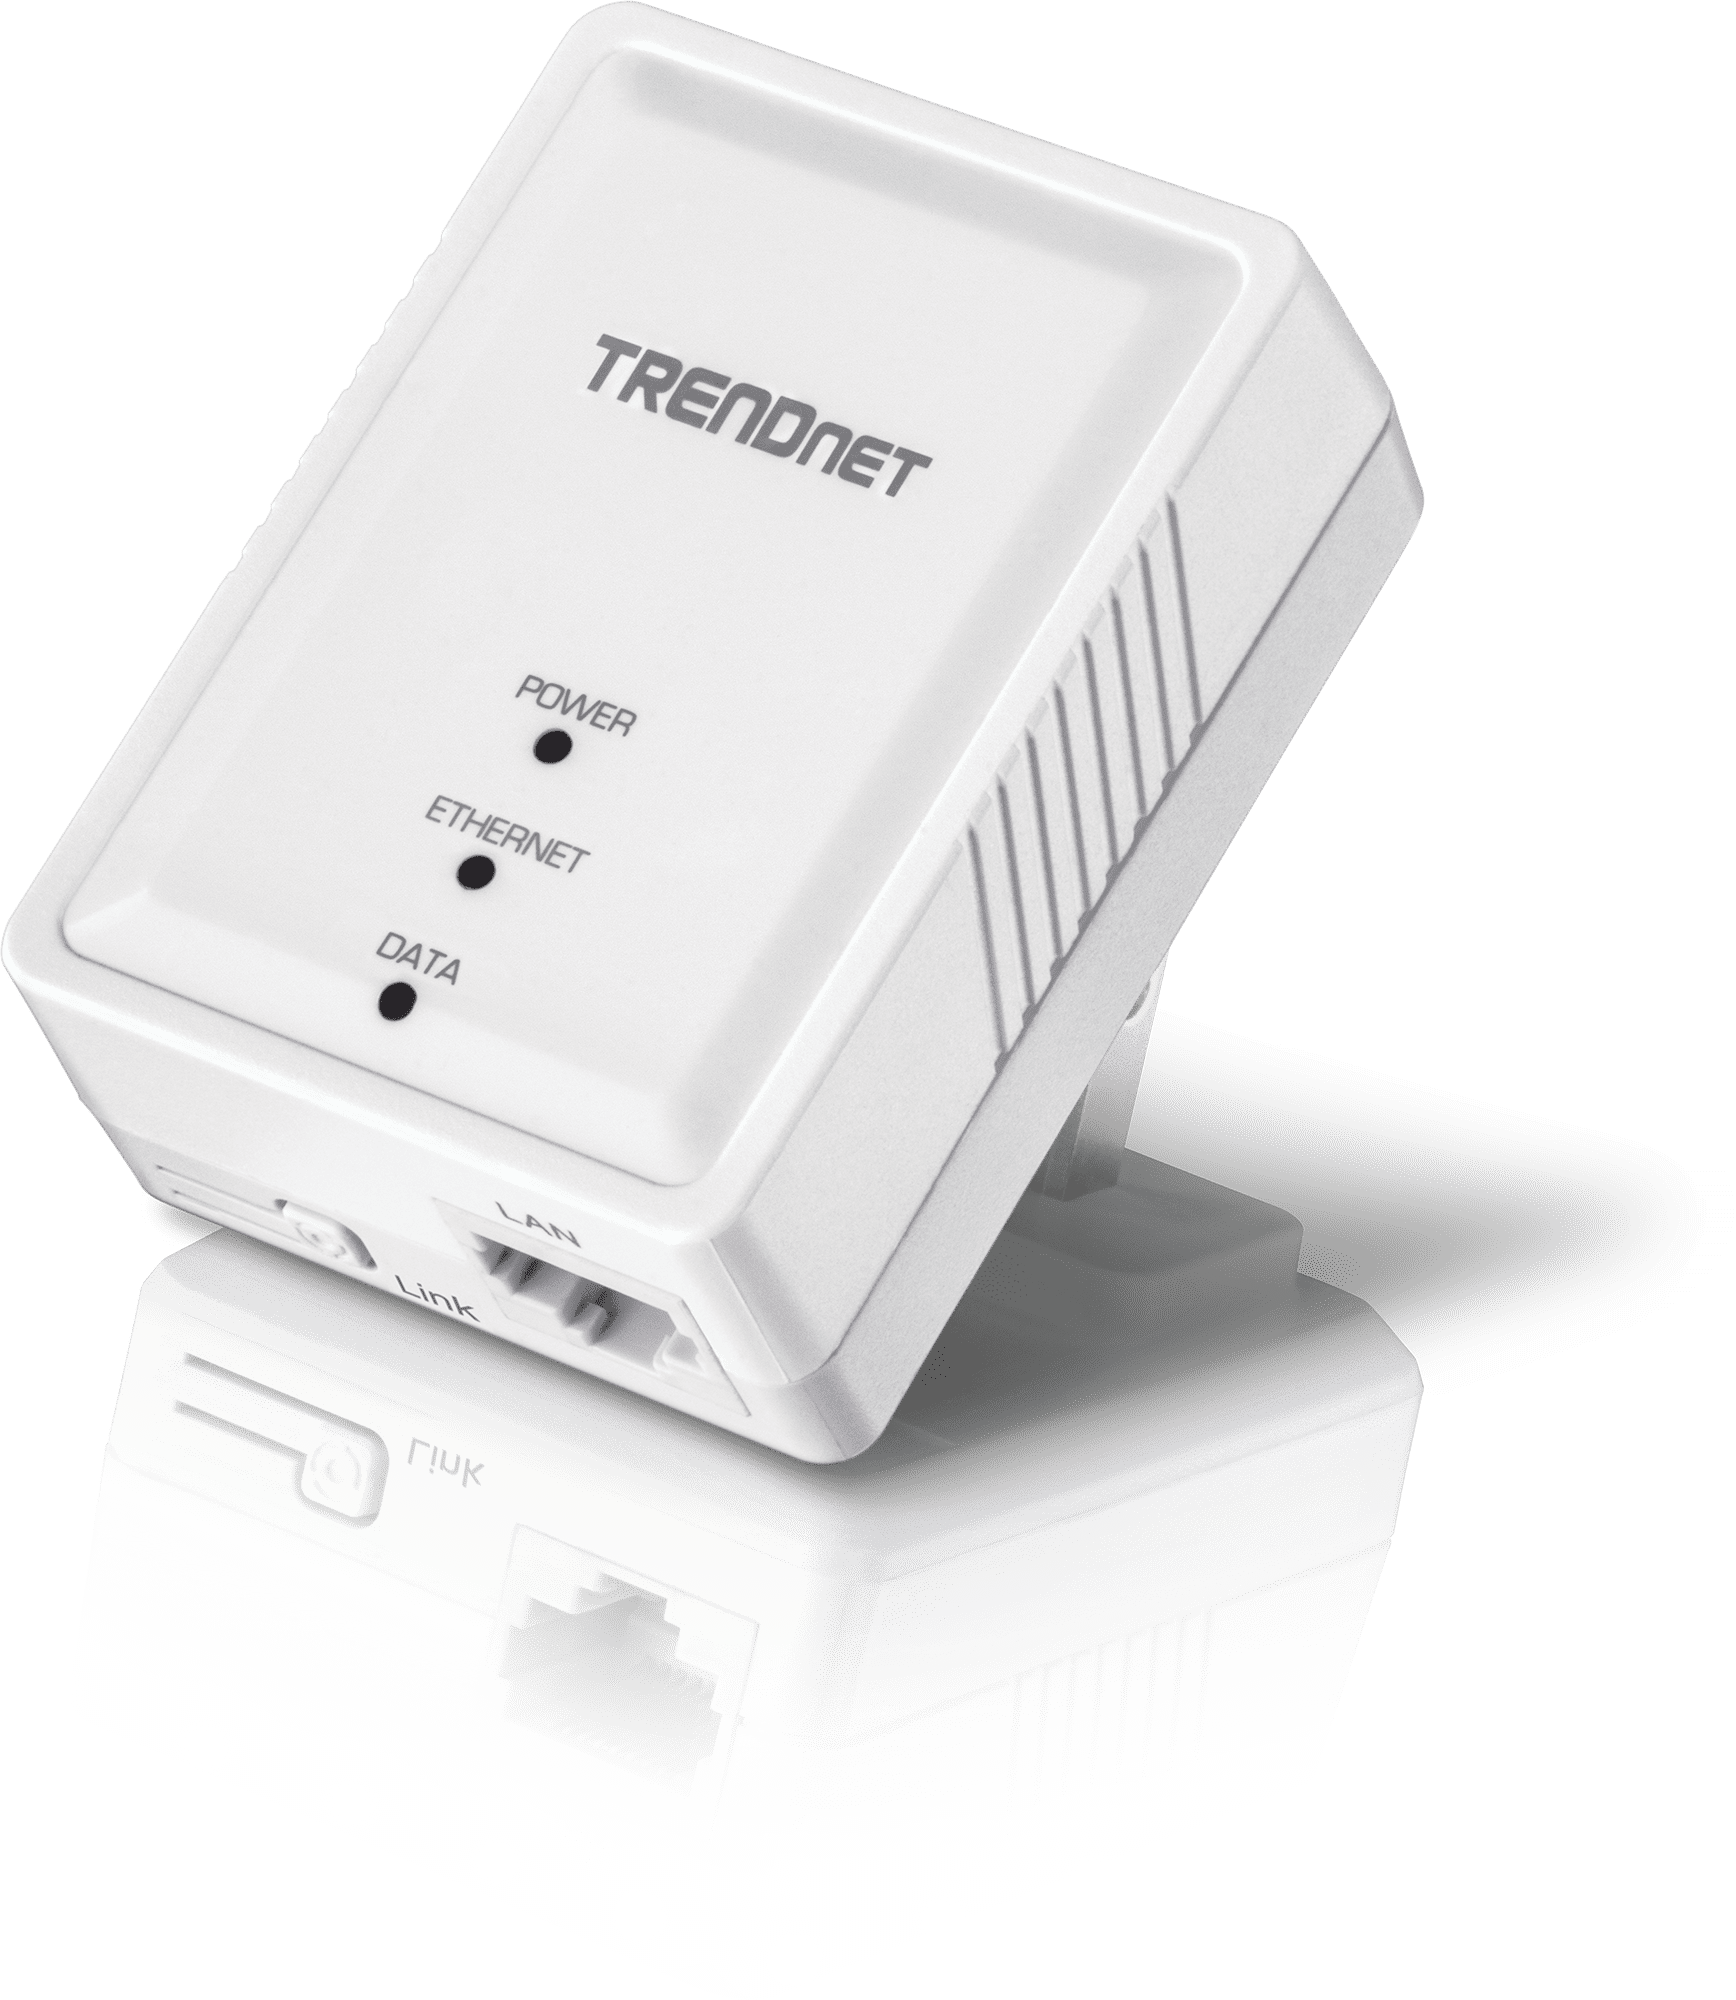 decide communication Pleated TRENDnet TPL-406E 500 AV Compact Powerline Ethernet Adapter - Walmart.com